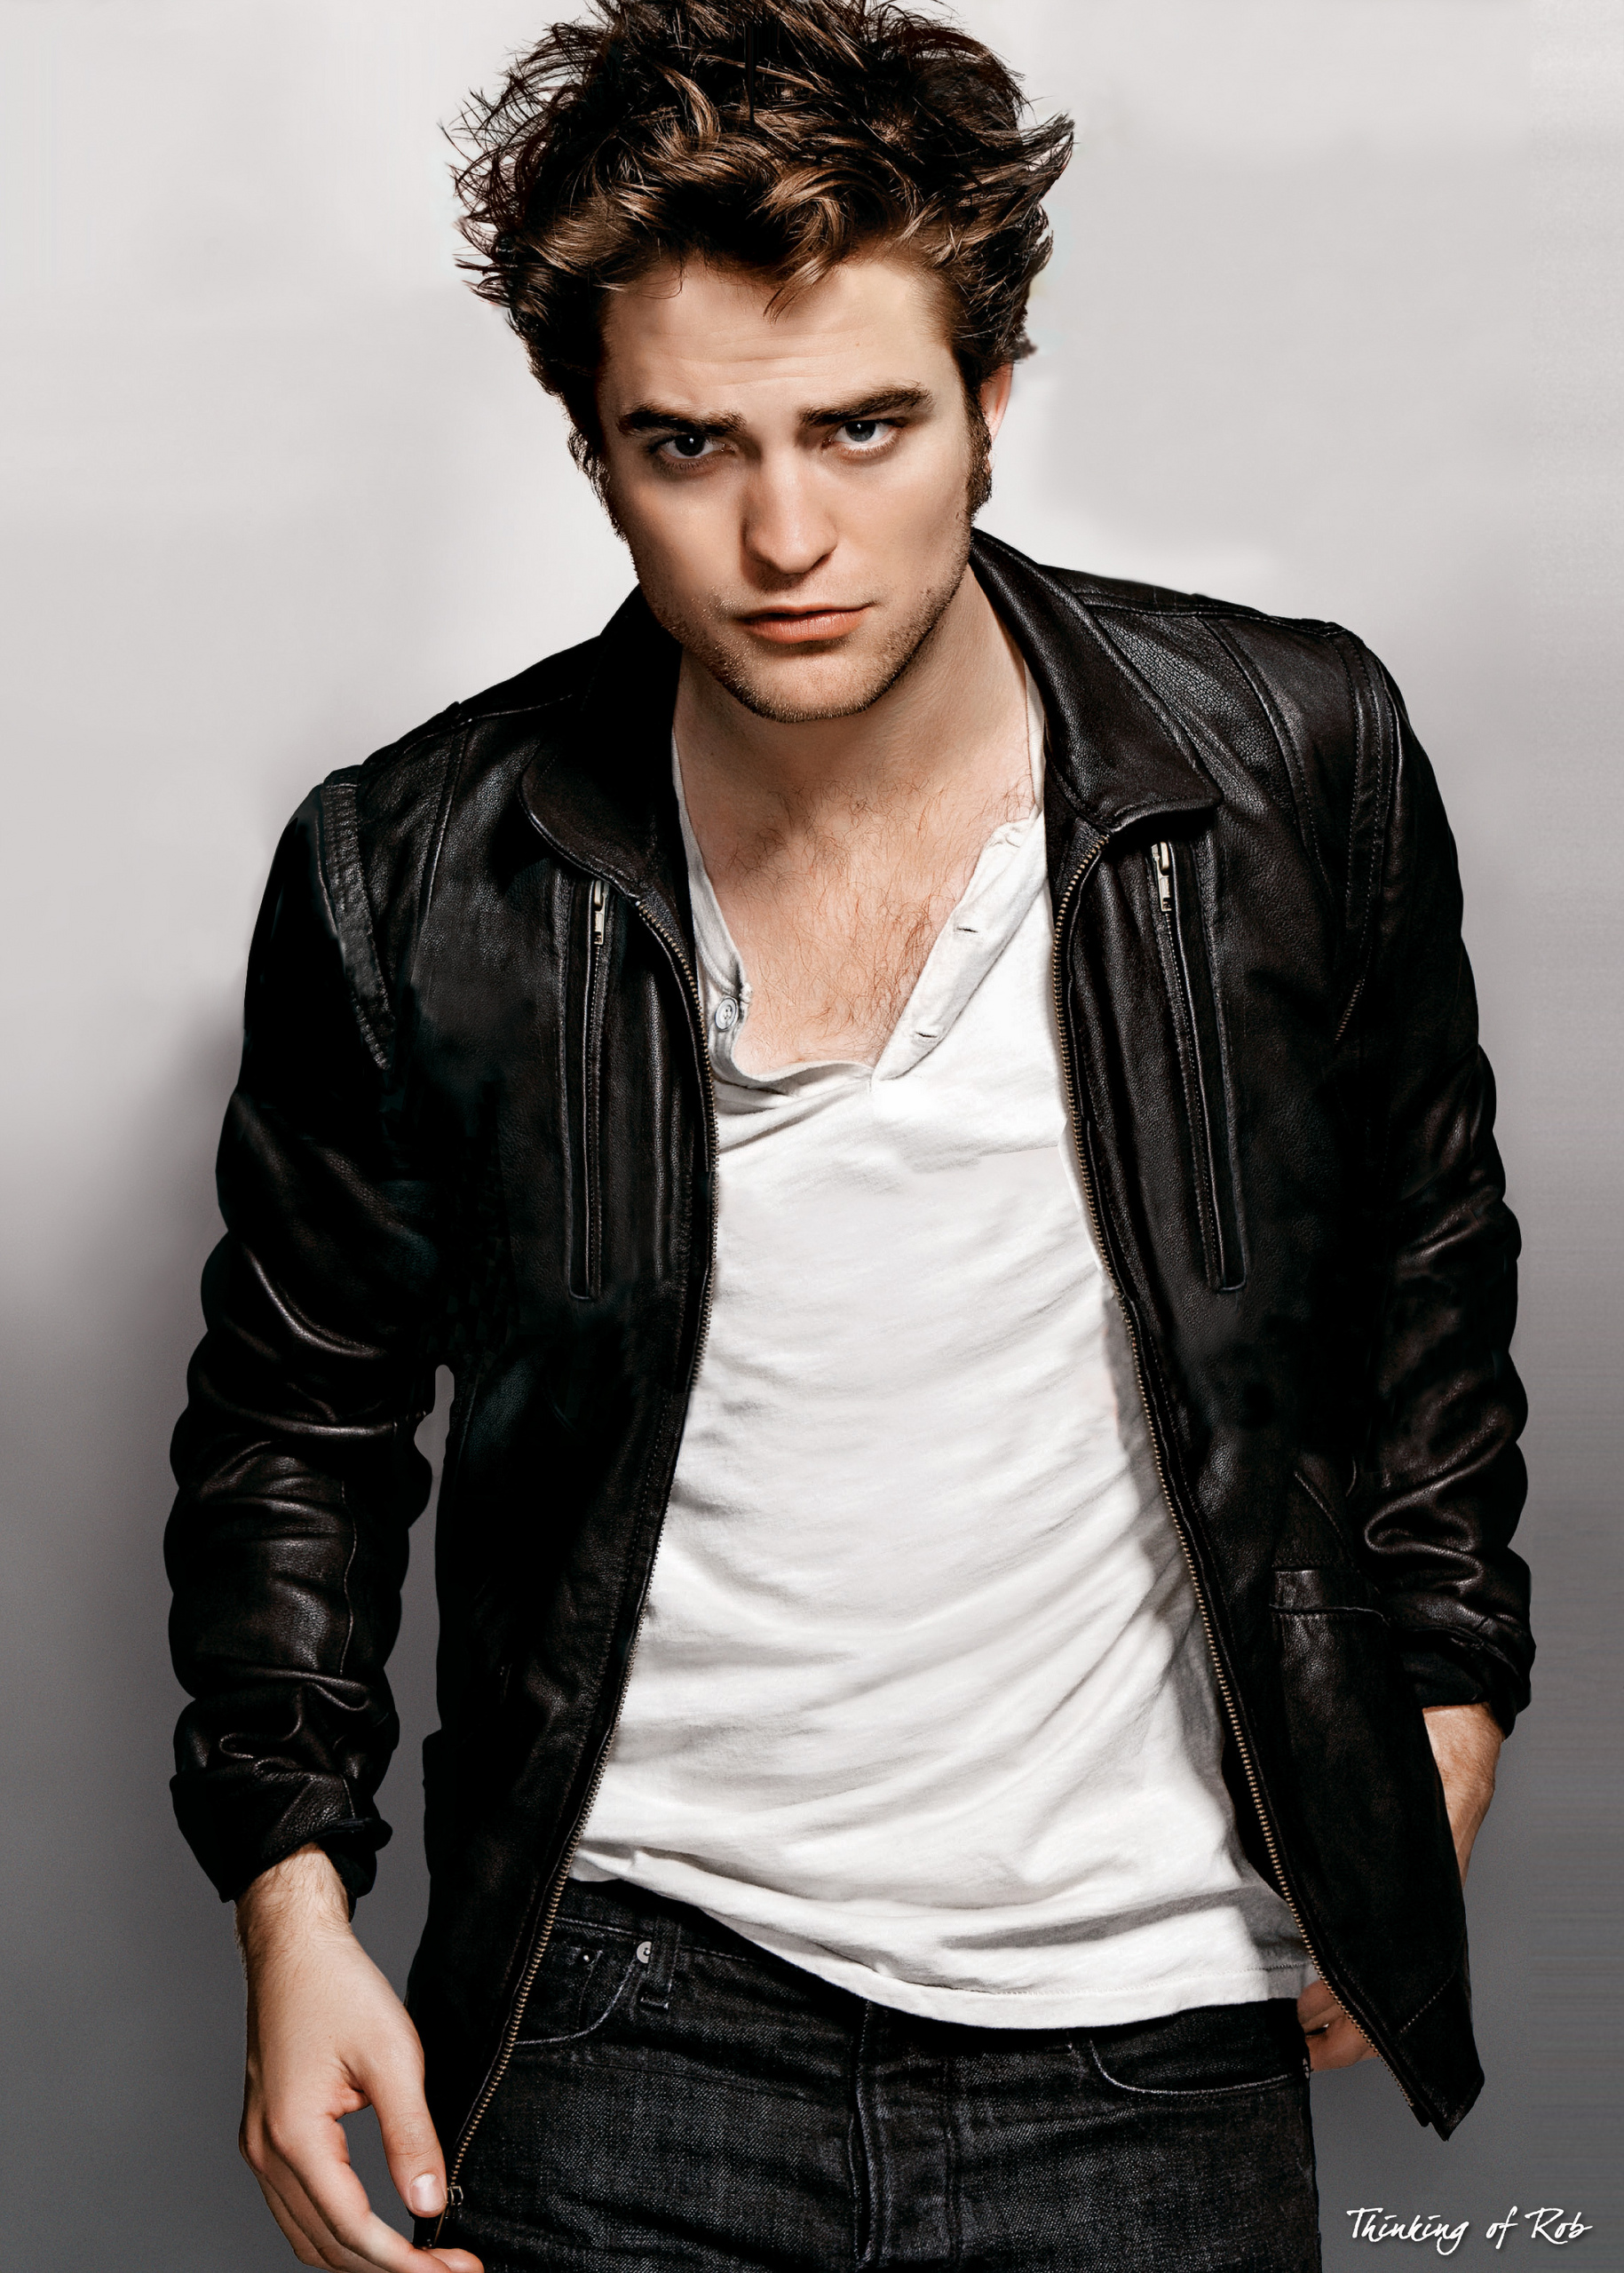 Amazing Robert Pattinson Pictures & Backgrounds - Robert Pattinson Hairstyle Twilight - HD Wallpaper 